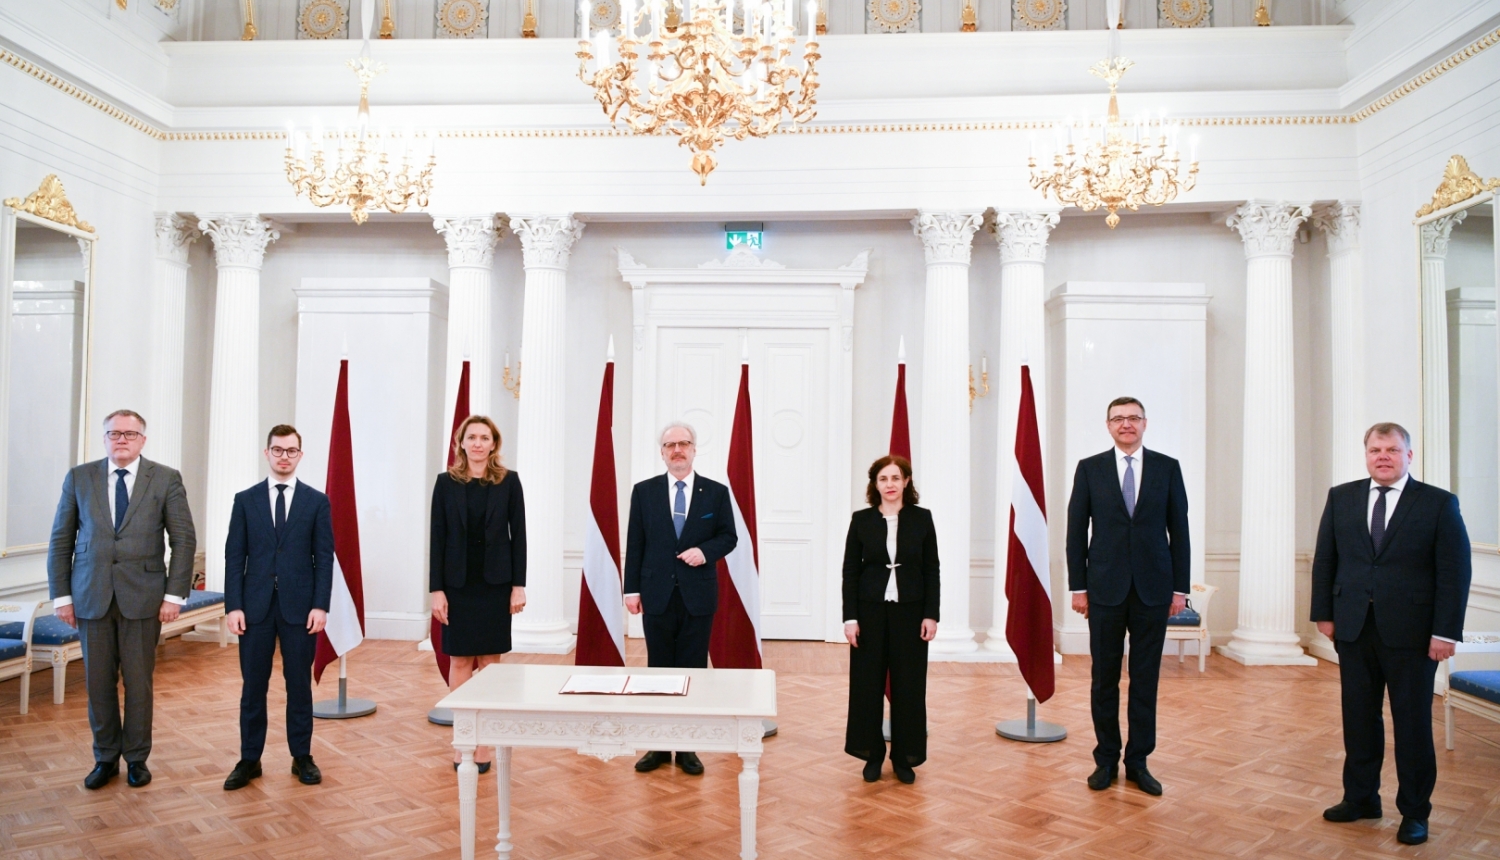 No kreisās: A. Ašeradens, A. T. Plešs, I. Ilvesa, E. Levits, I. Šuplinska, J. Reirs, G. Kaminskis